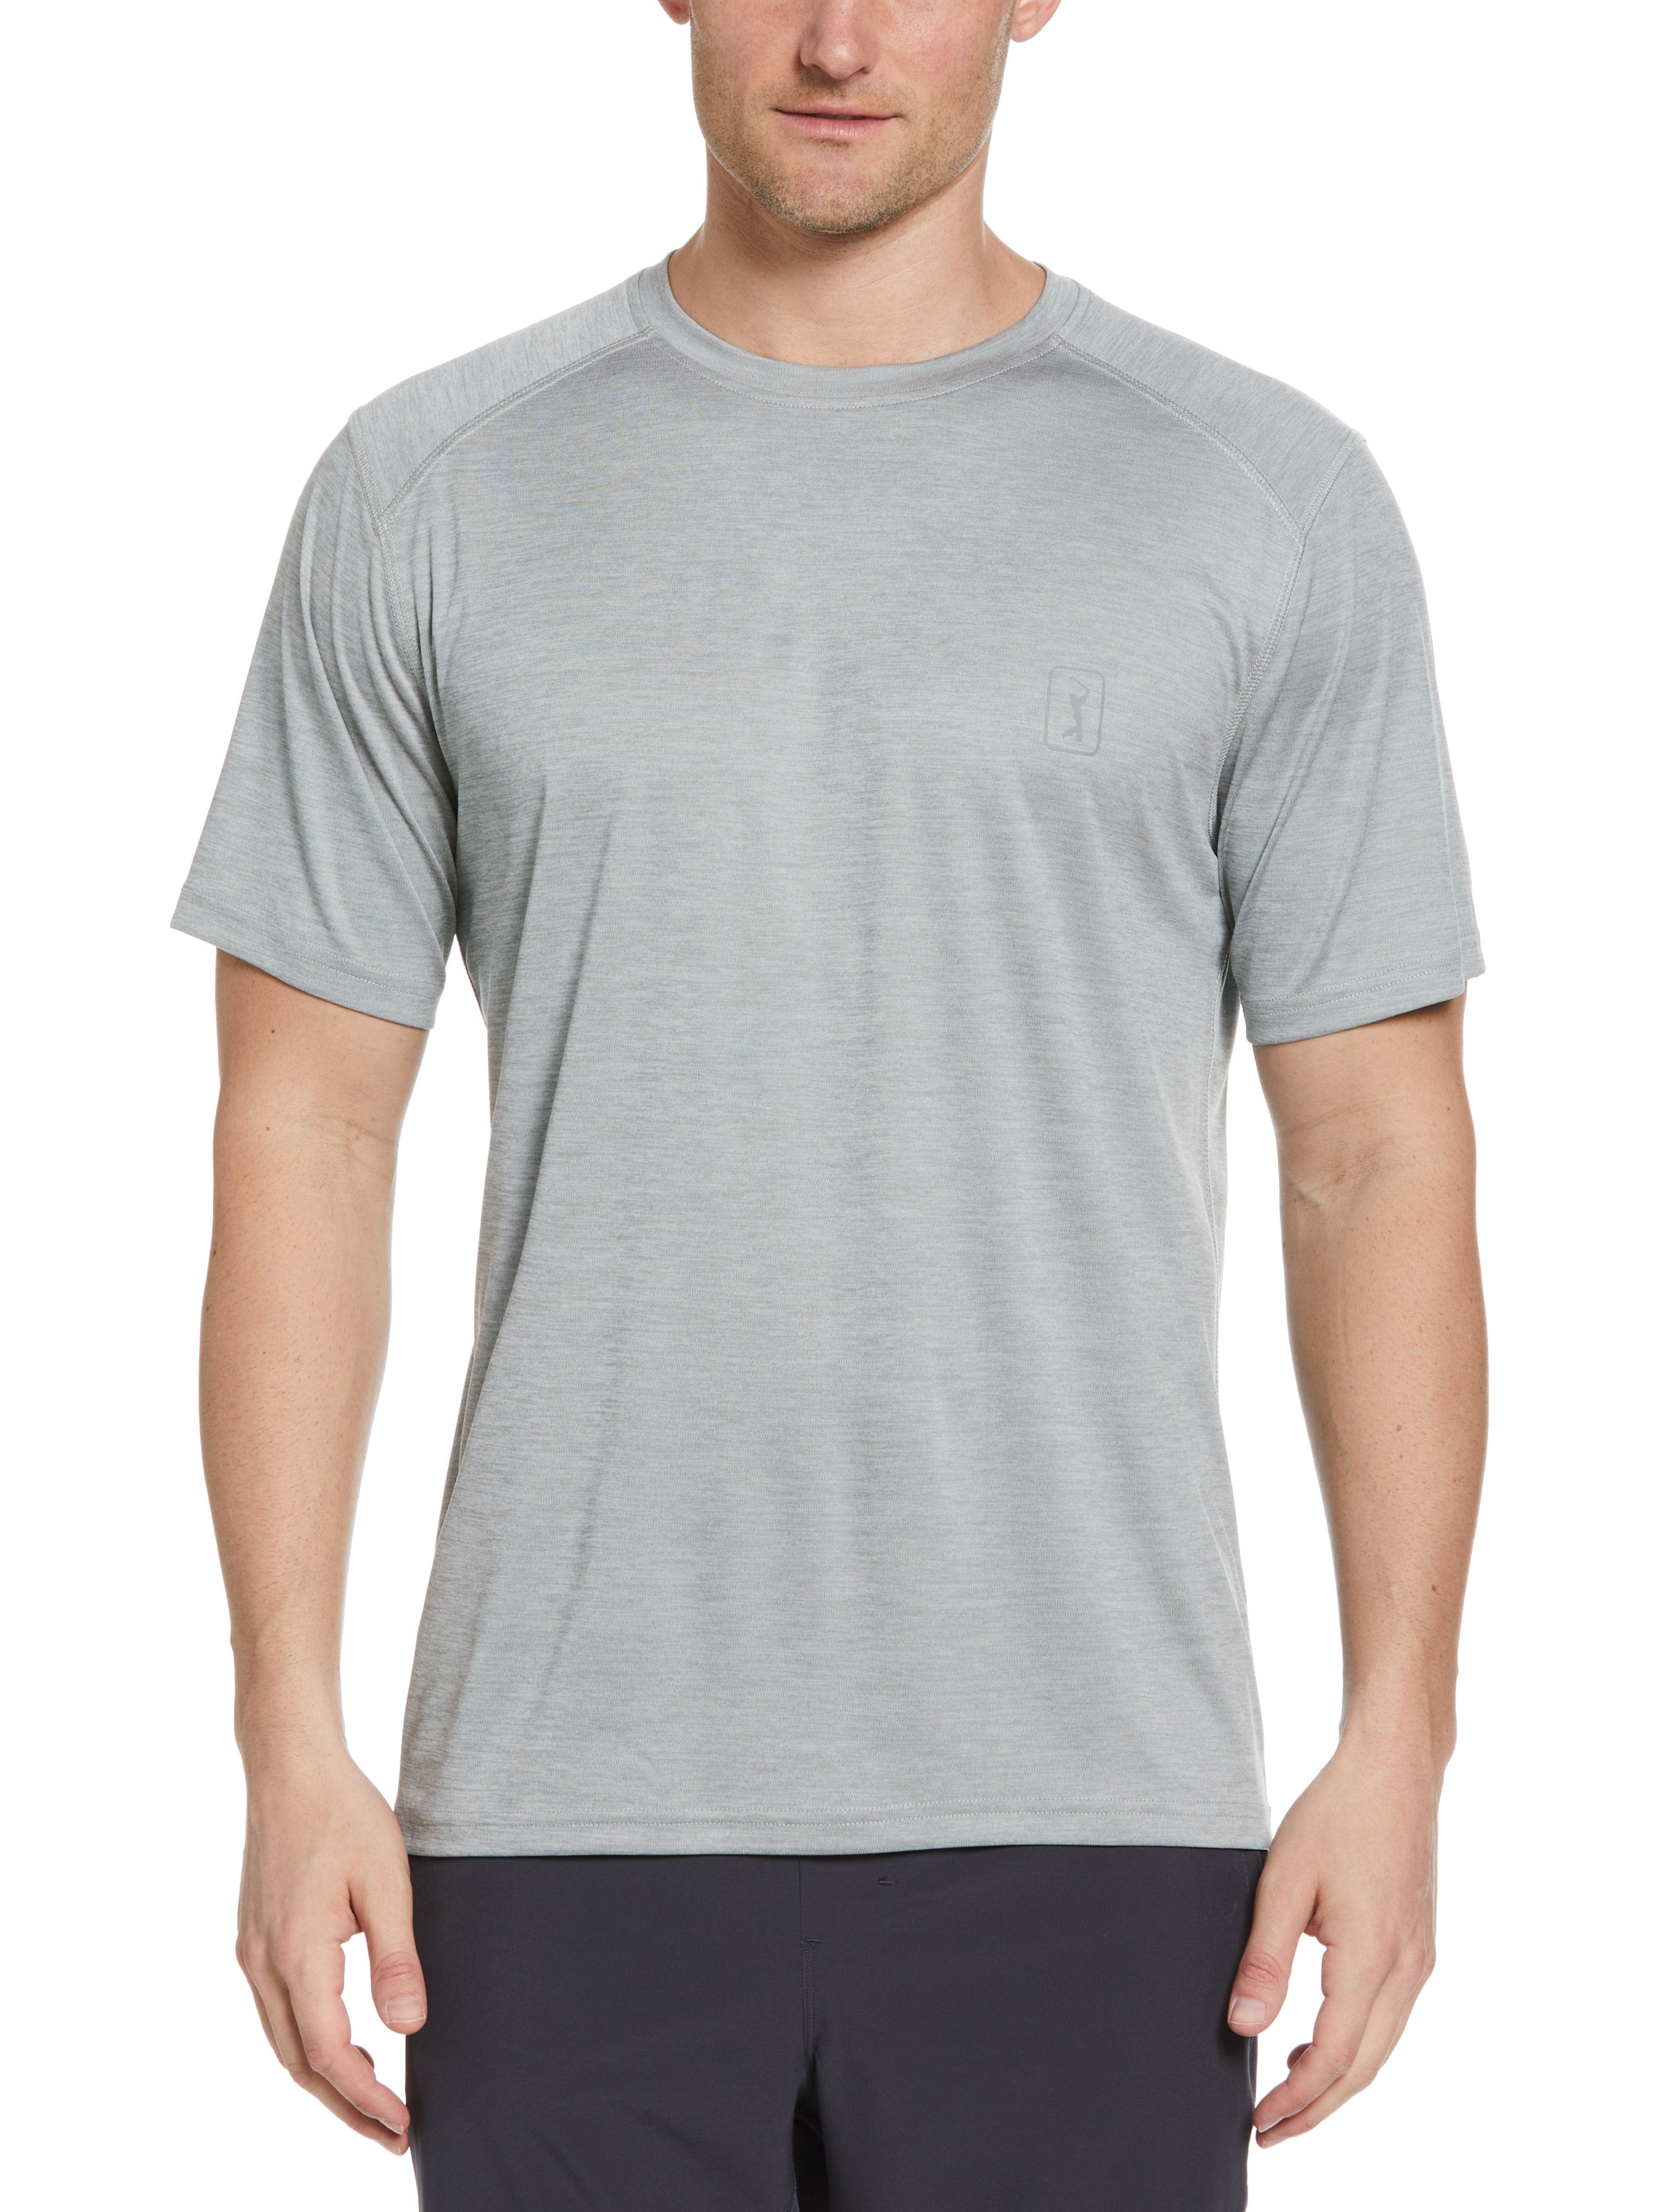 PGA TOUR Apparel Mens Performance Crew Golf T-Shirt, Size Large, Light Grey Heather Gray, 100% Polyester | Golf Apparel Shop